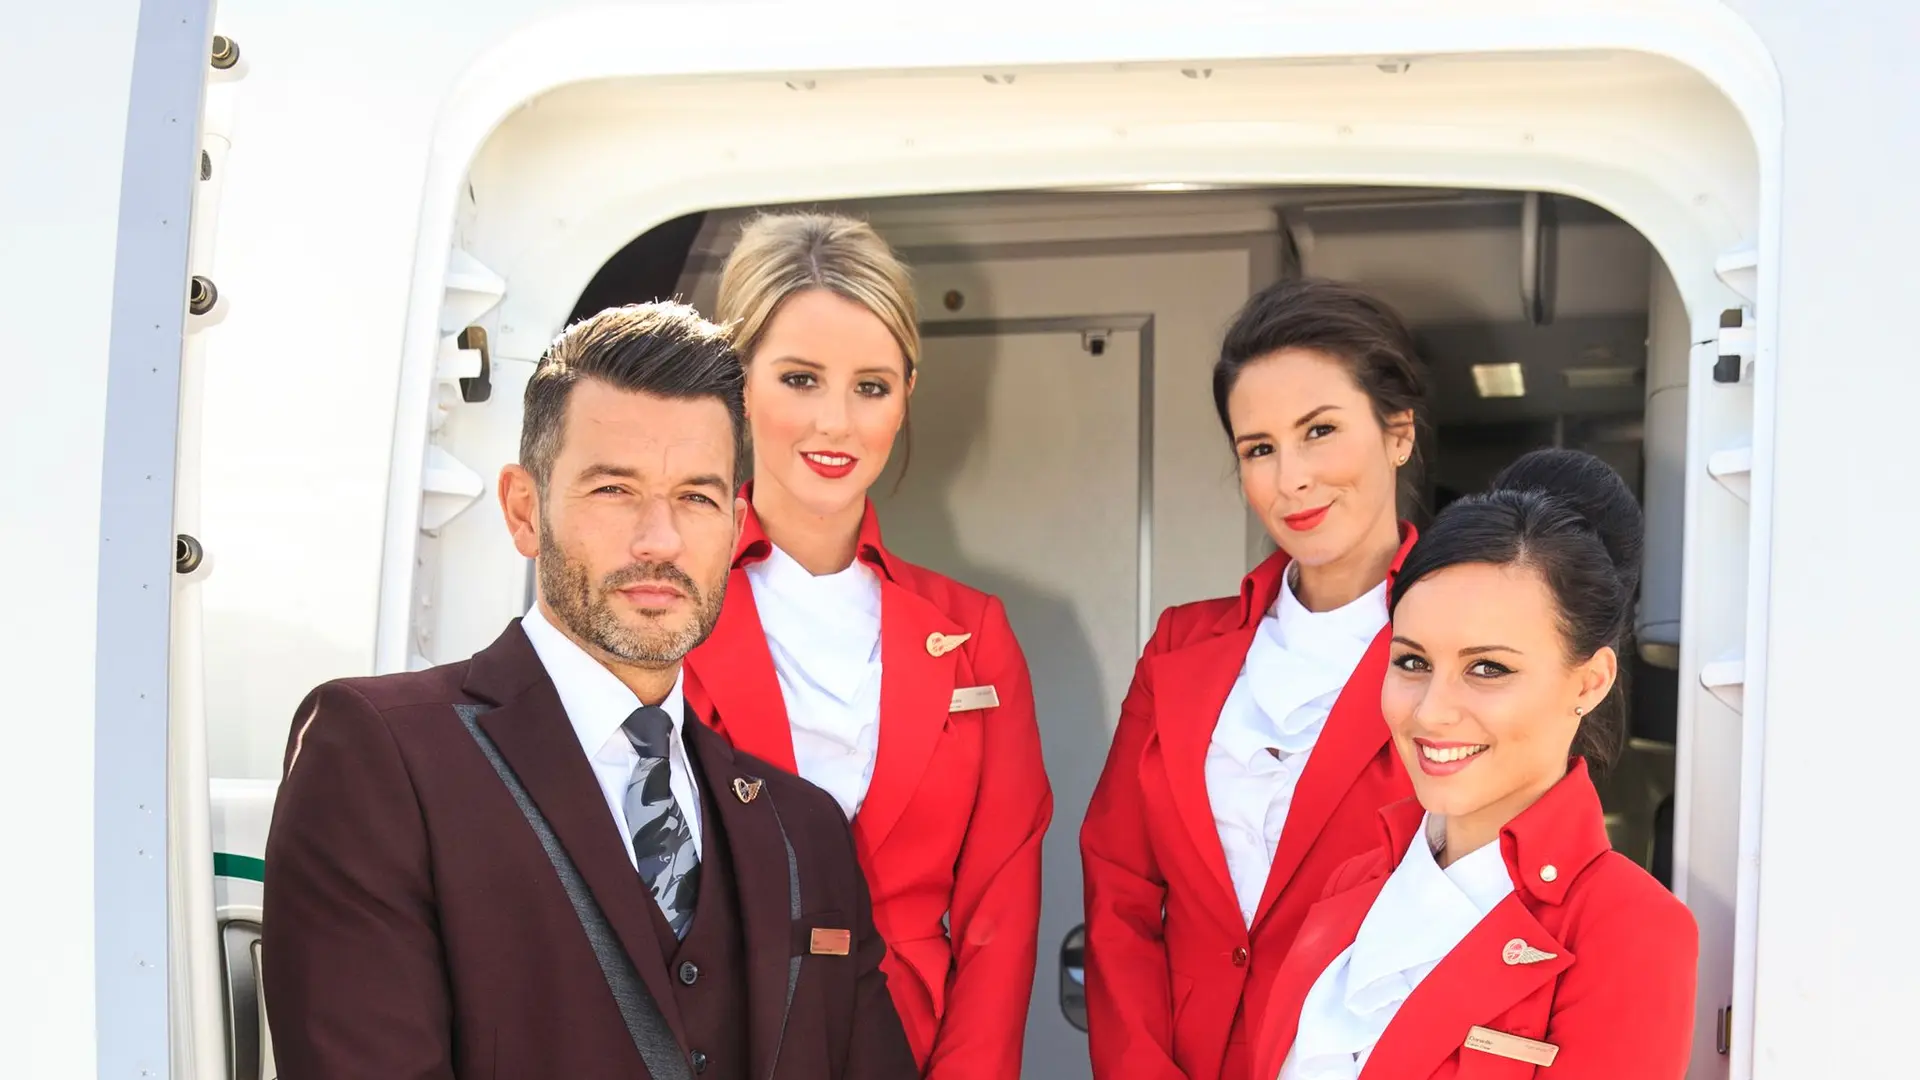 Airline review Service - Virgin Atlantic - 1